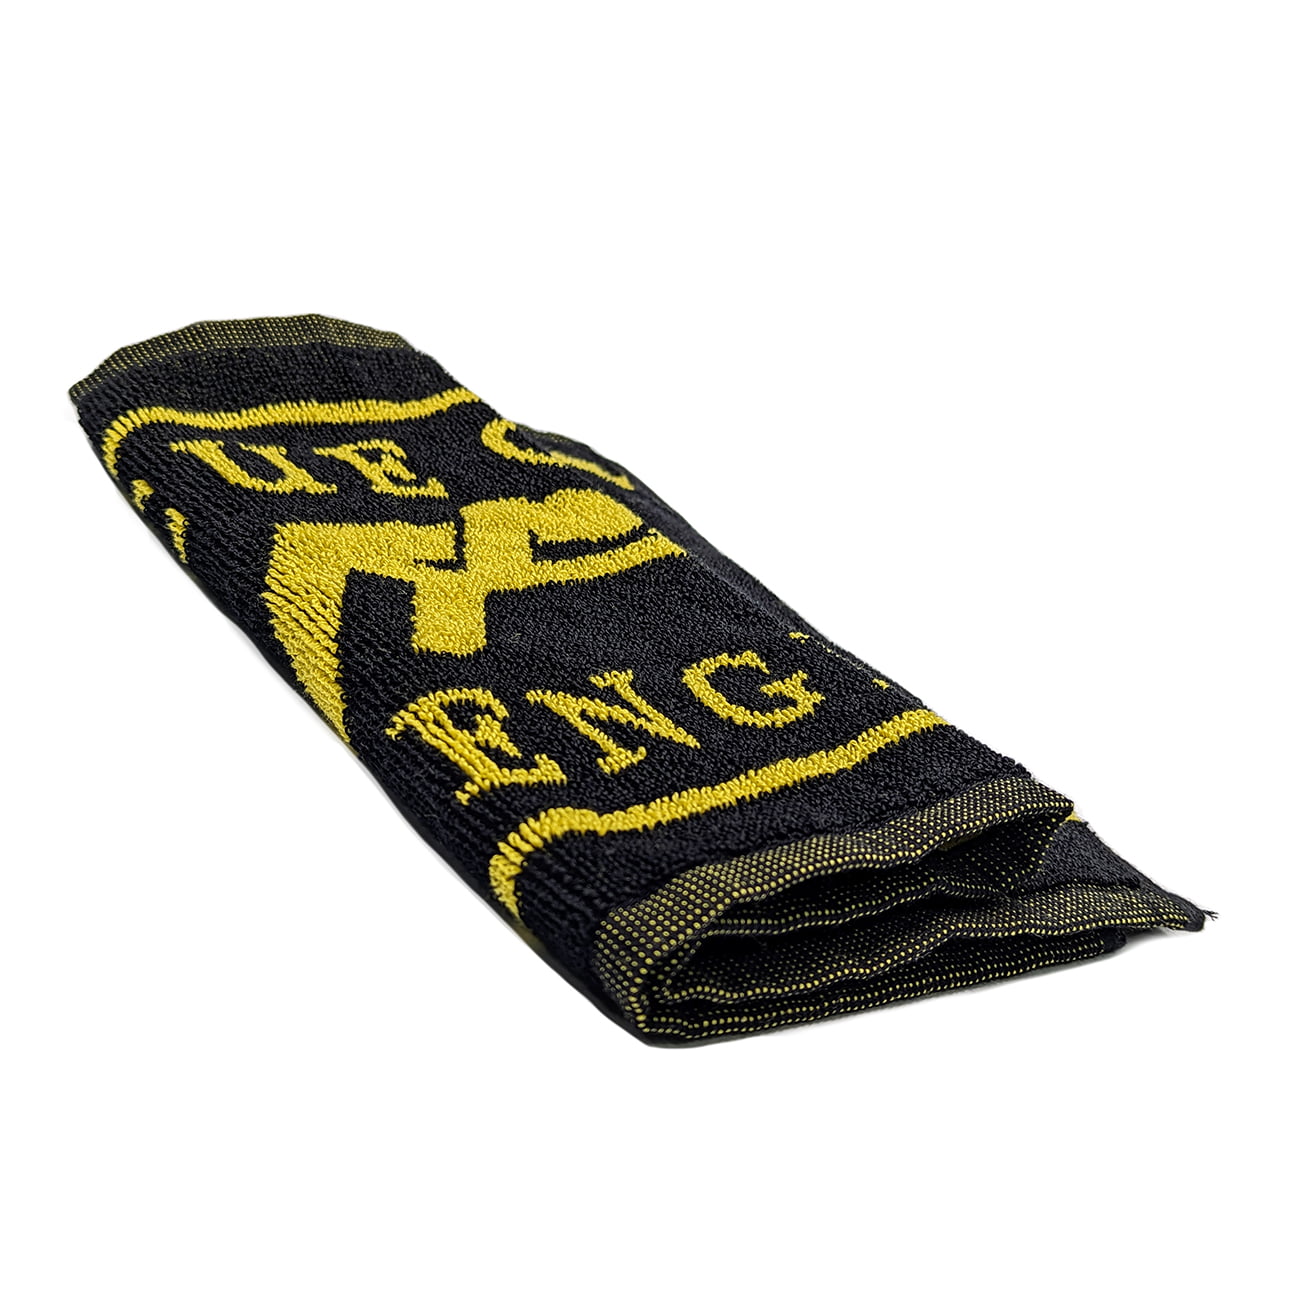 Cue Craft Gold Black Cue Towel